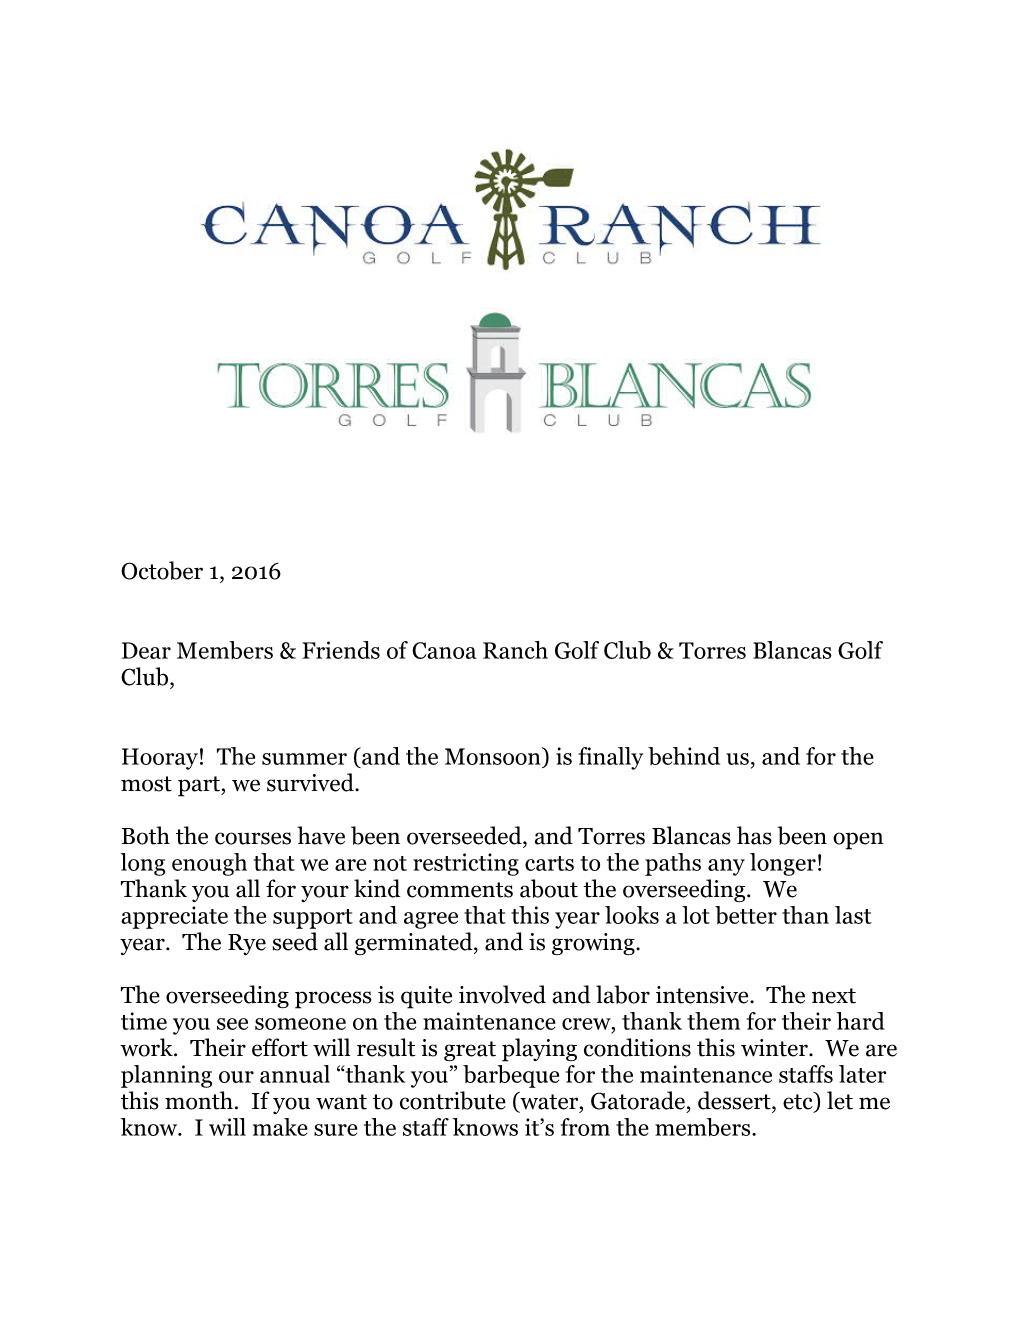 Dear Members & Friends of Canoa Ranch Golf Club & Torres Blancas Golf Club